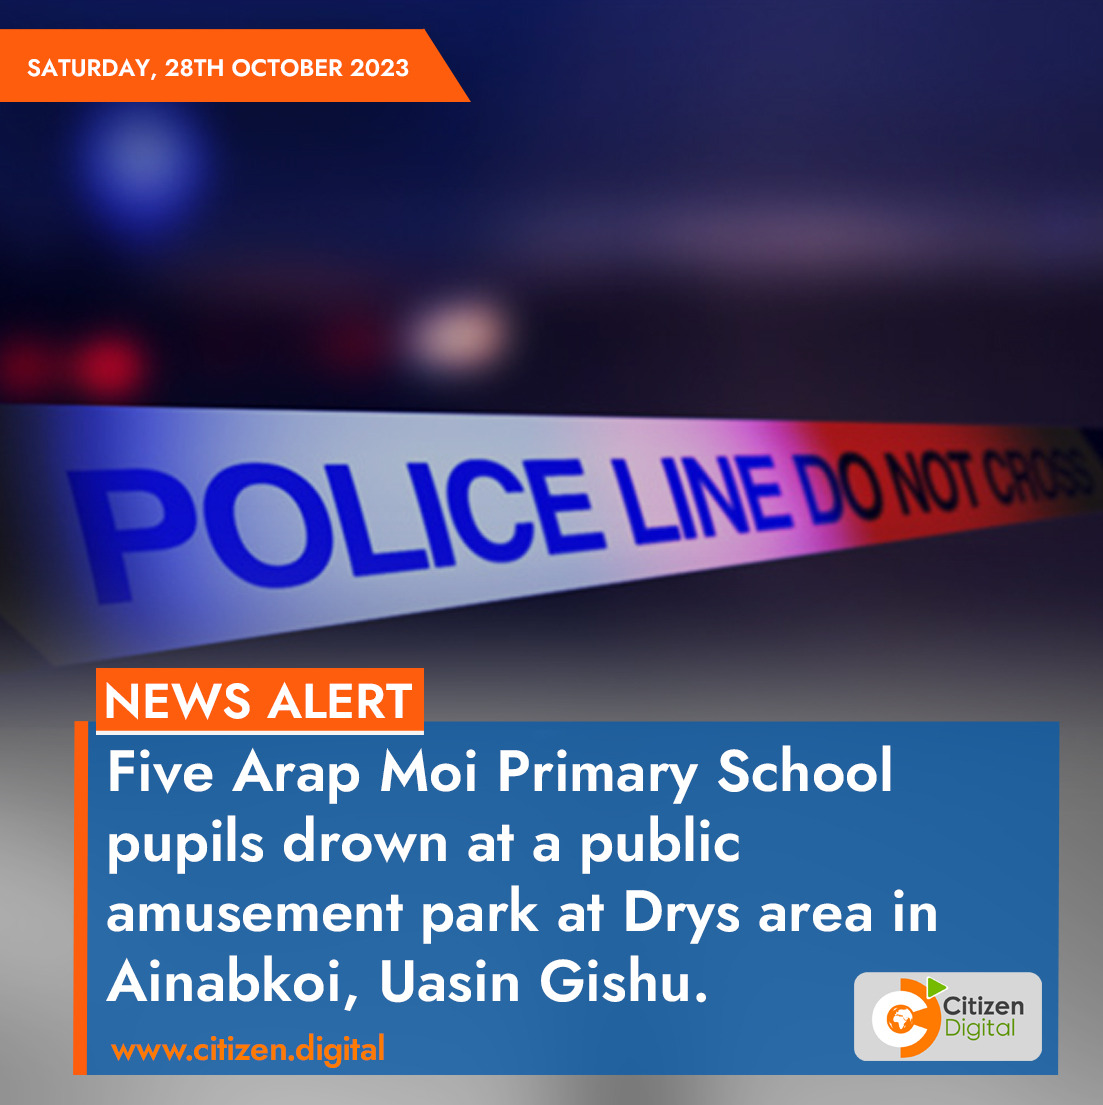 Five Arap Moi Primary School pupils drown at a public amusement park at Drys area in Ainabkoi, Uasin Gishu.